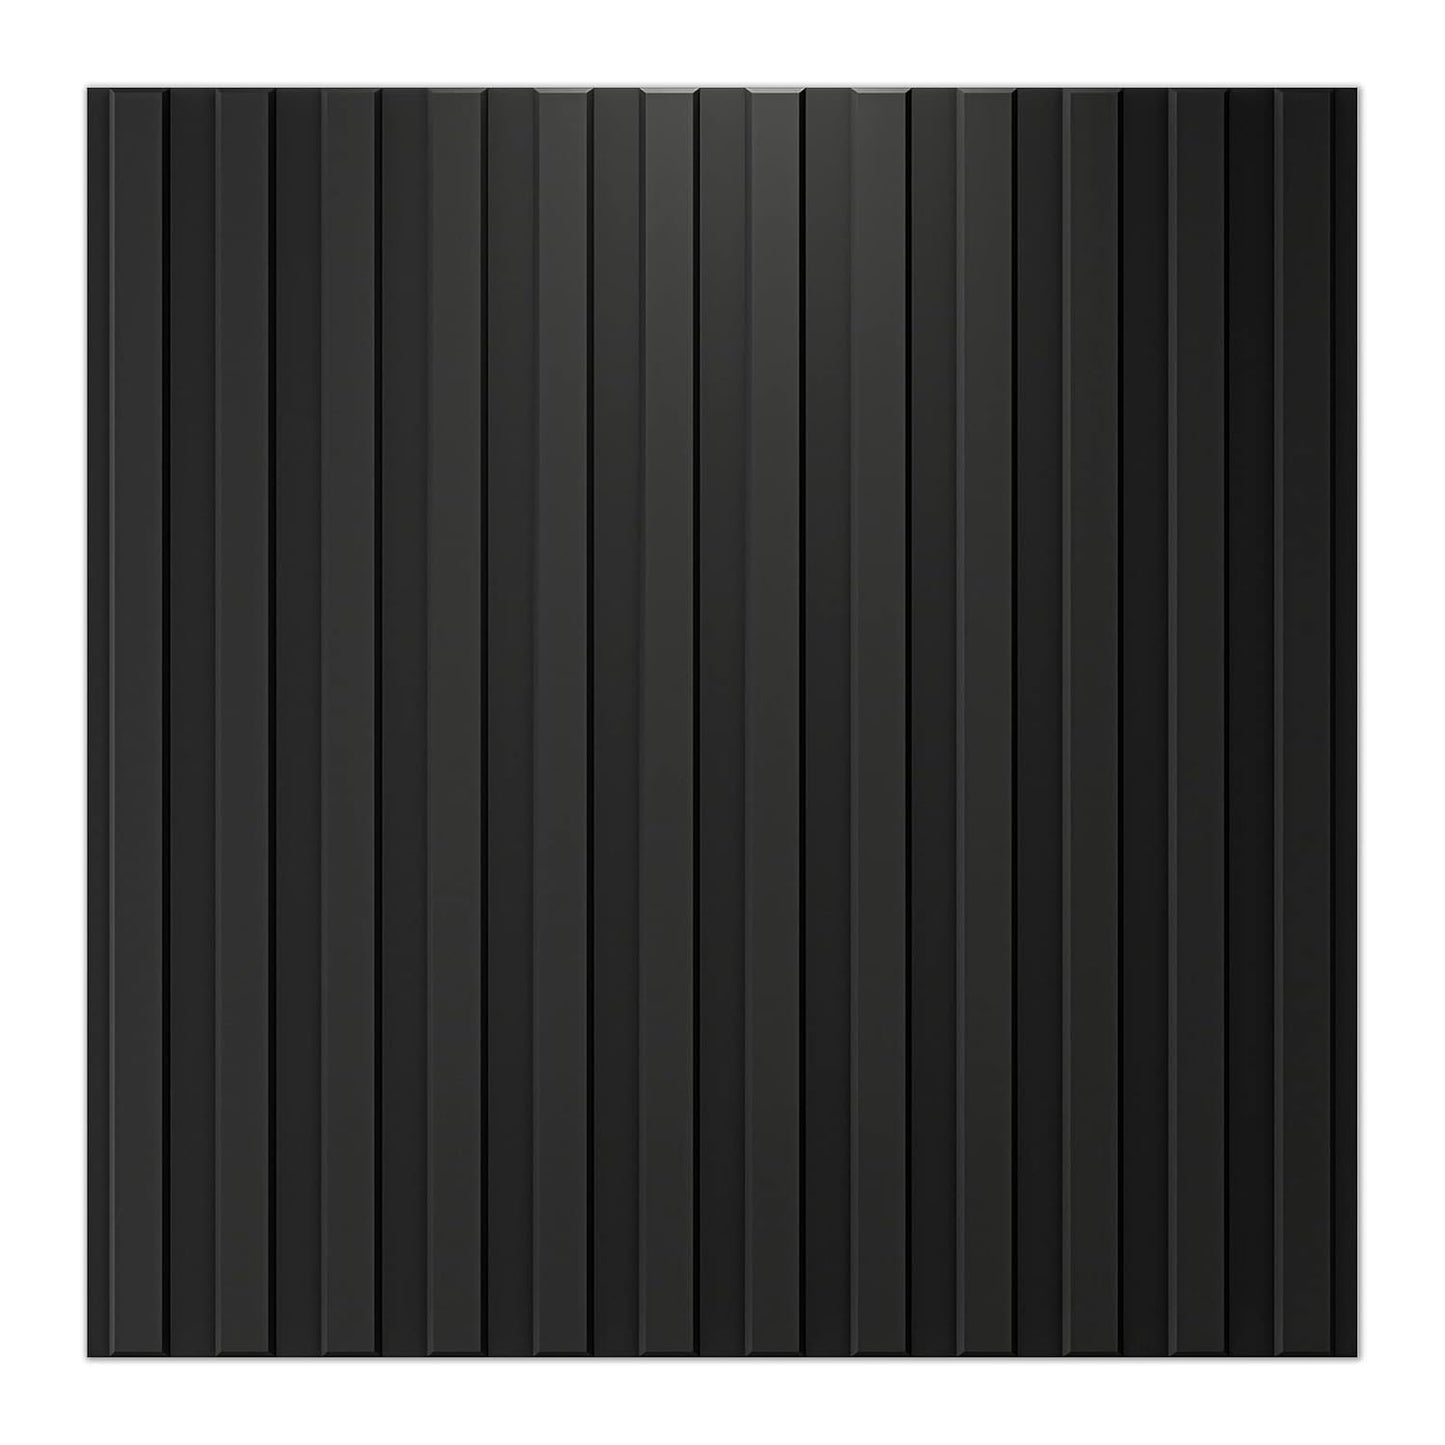 Art3d Slat Wall Panel, 3D Fluted Textured Panel 12-Tile 19.7 x 19.7in. - Black